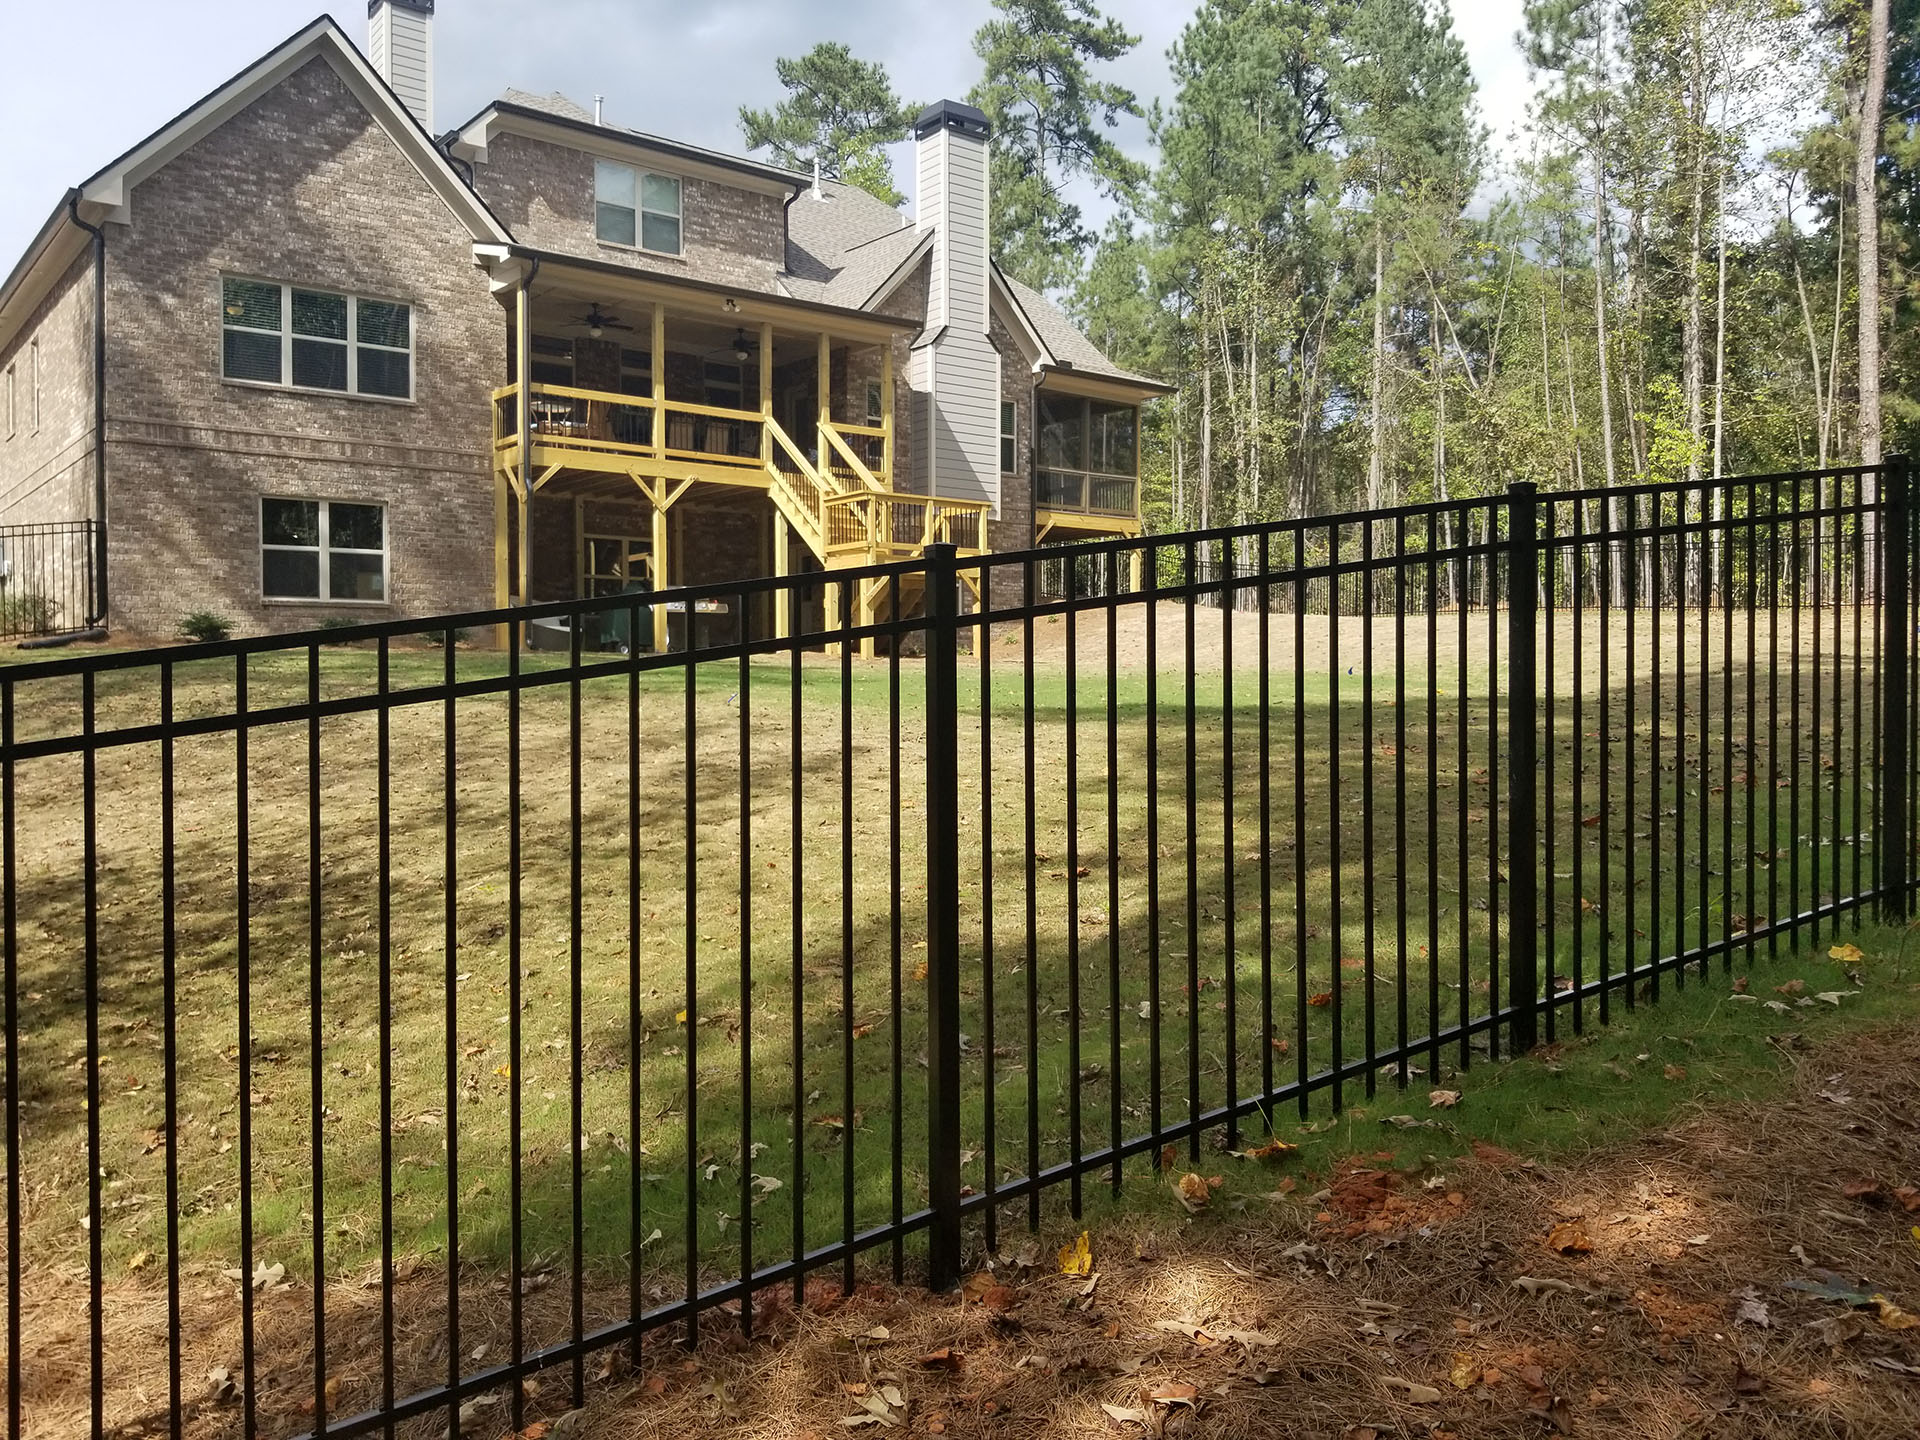 Black aluminum fencing enclosing a brick home with yellow porch.